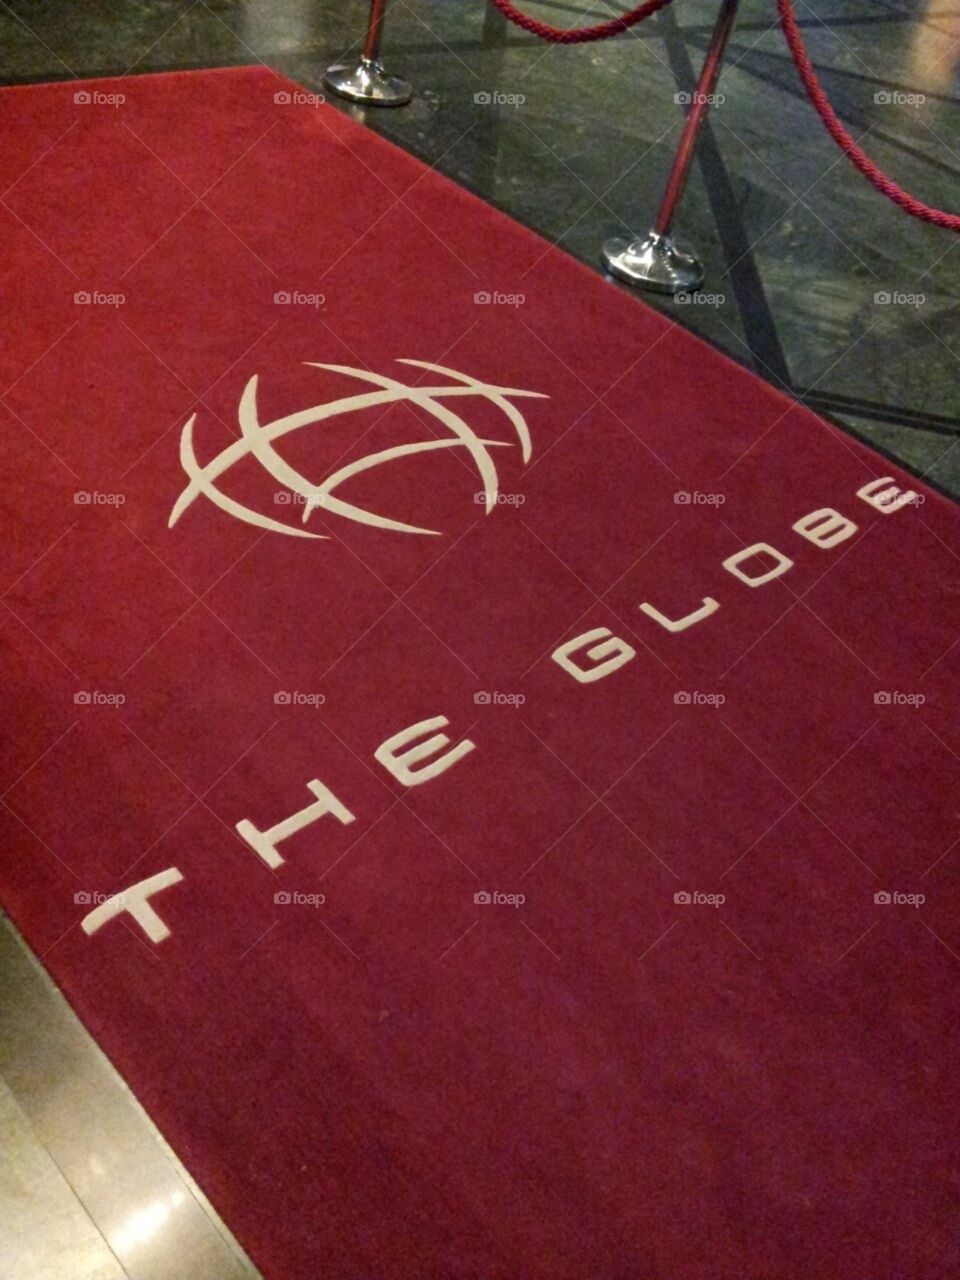 The Globe Restaurant